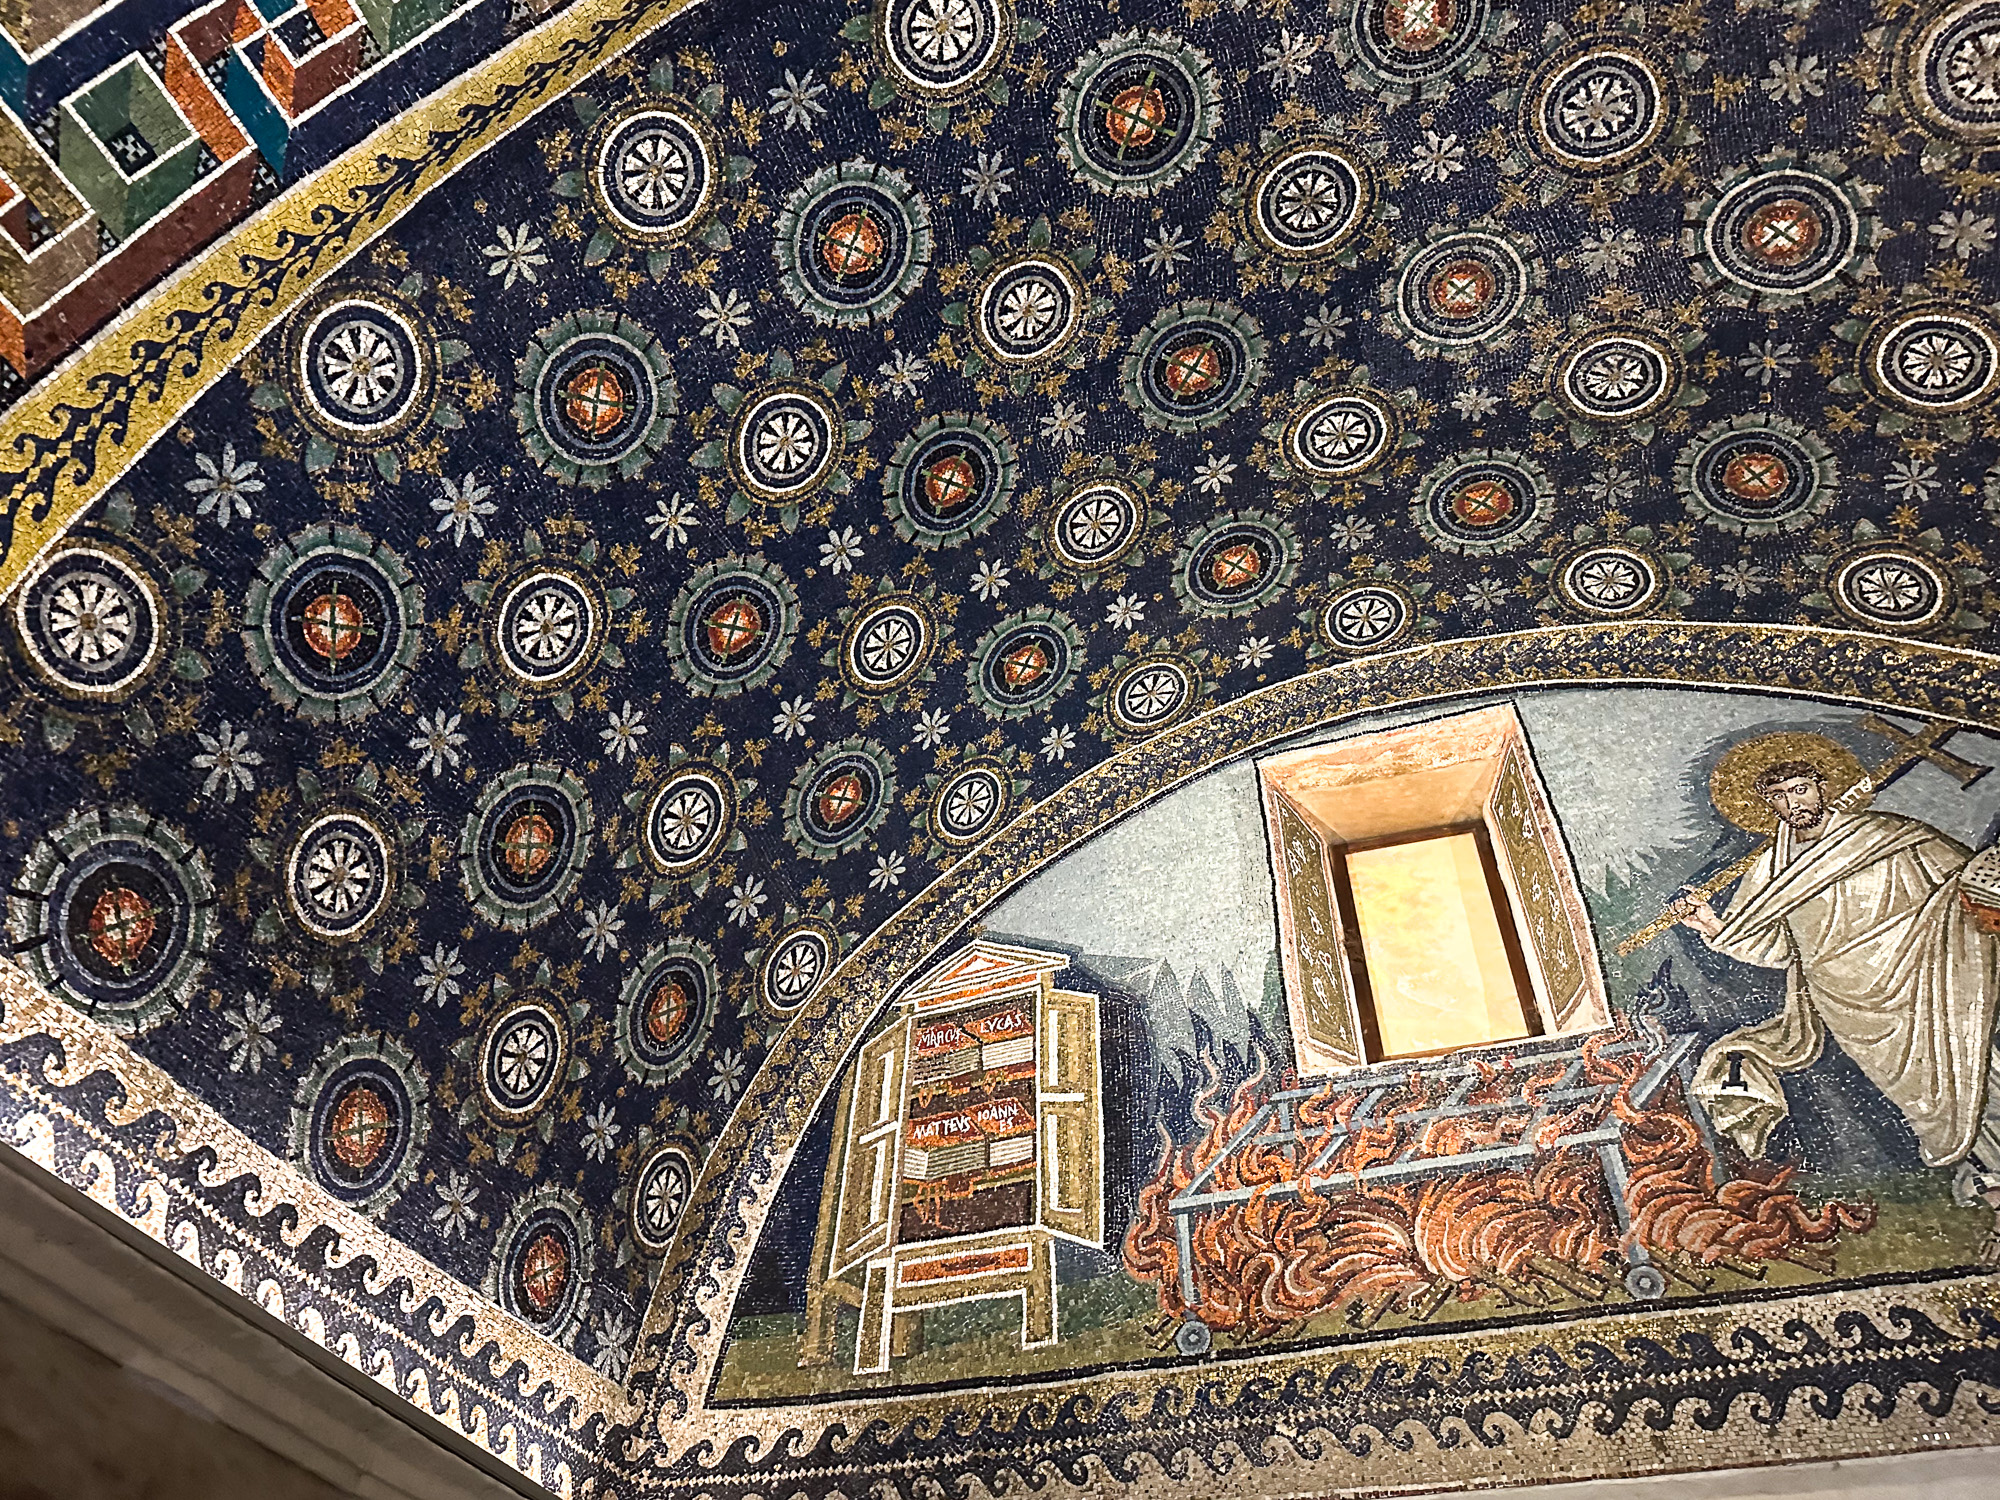 Italy-Ravenna-Mausoleum-Galla-Placidia-Starry-Sky-with-books